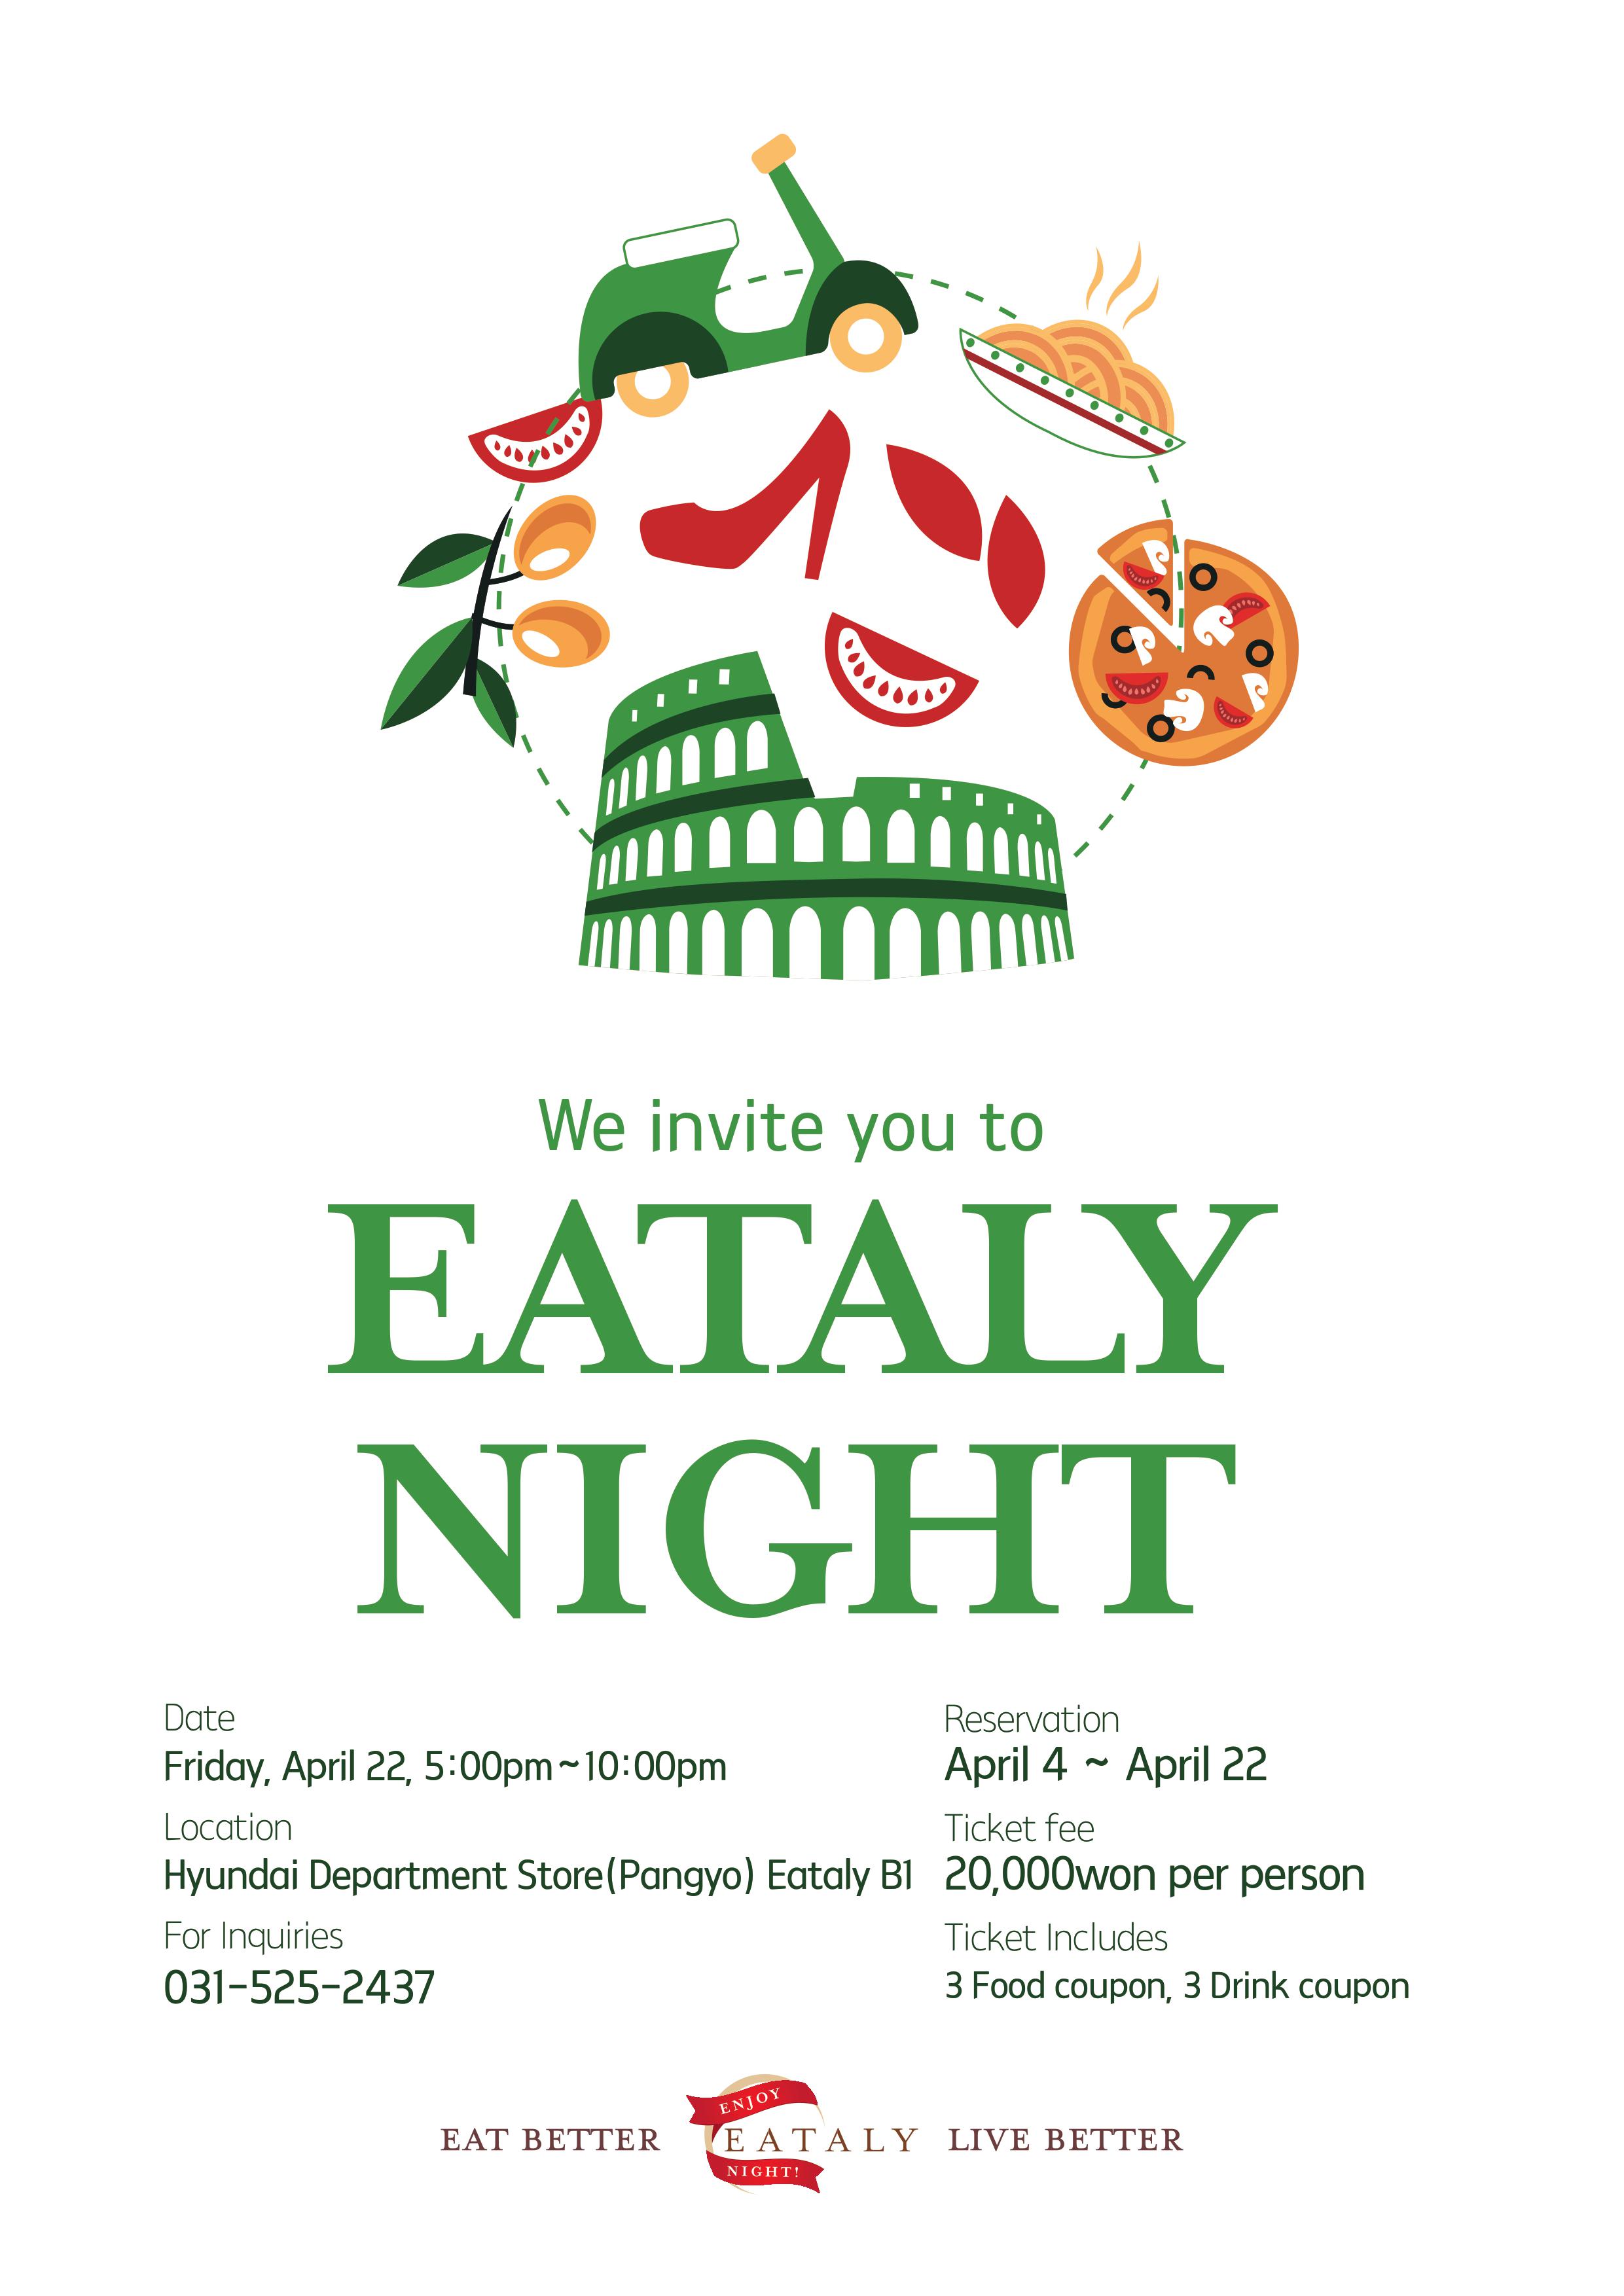 Eataly - Eataly night (April 22)